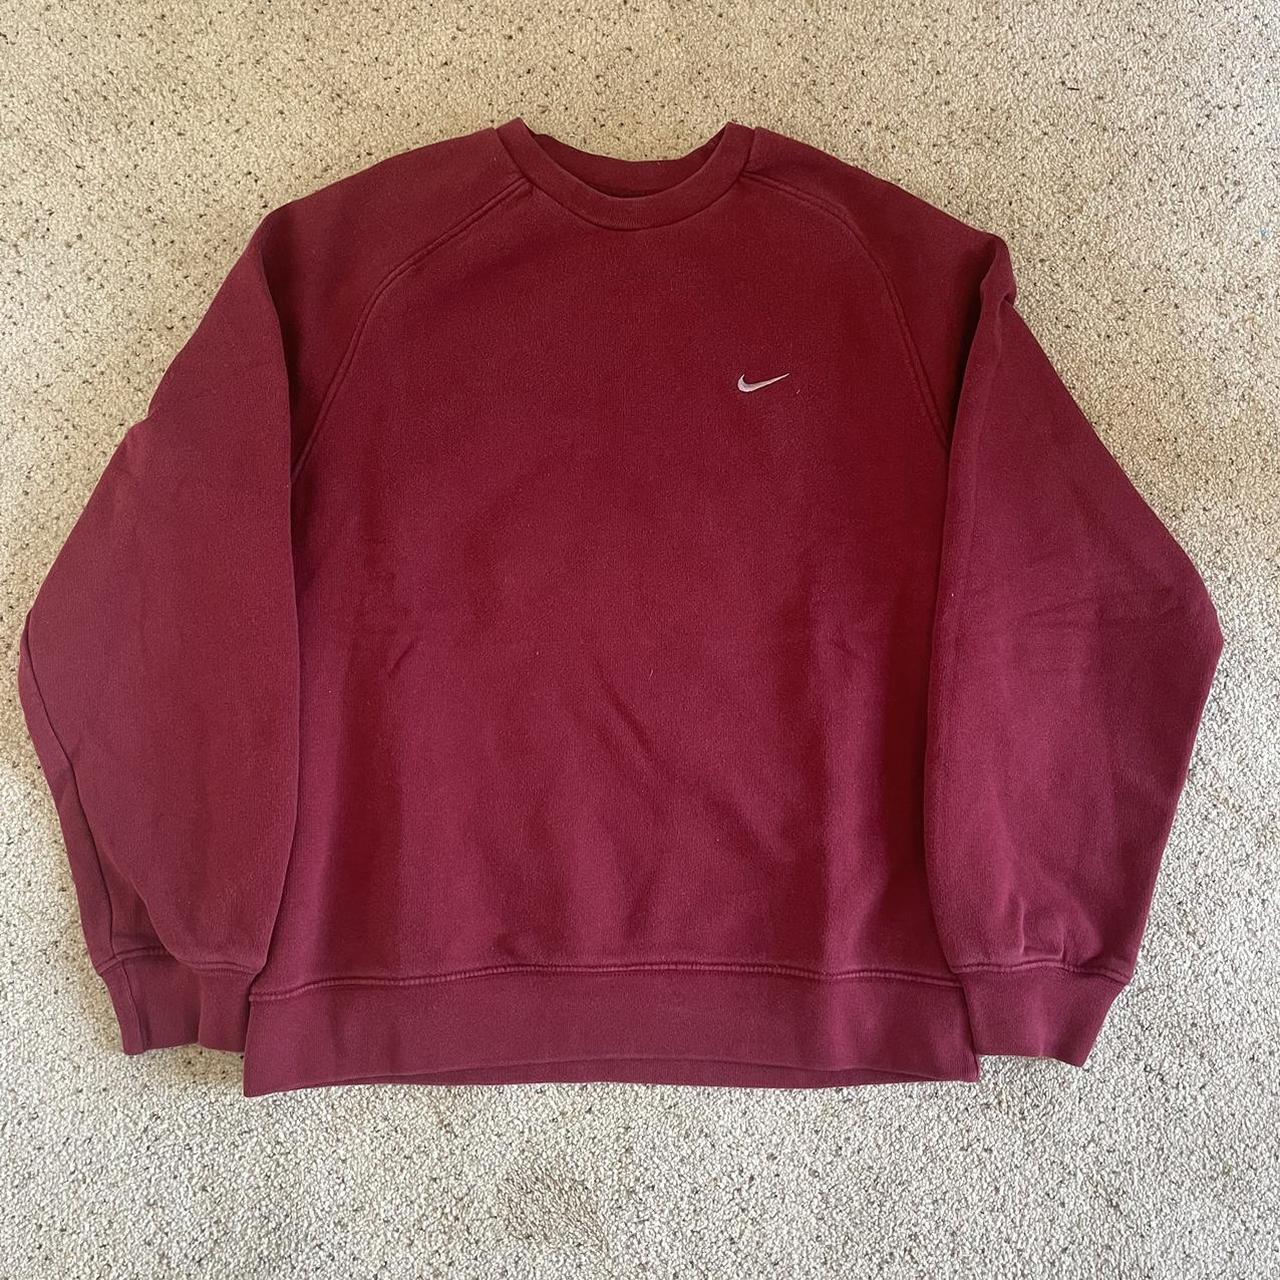 Nike Men's Red Sweatshirt | Depop